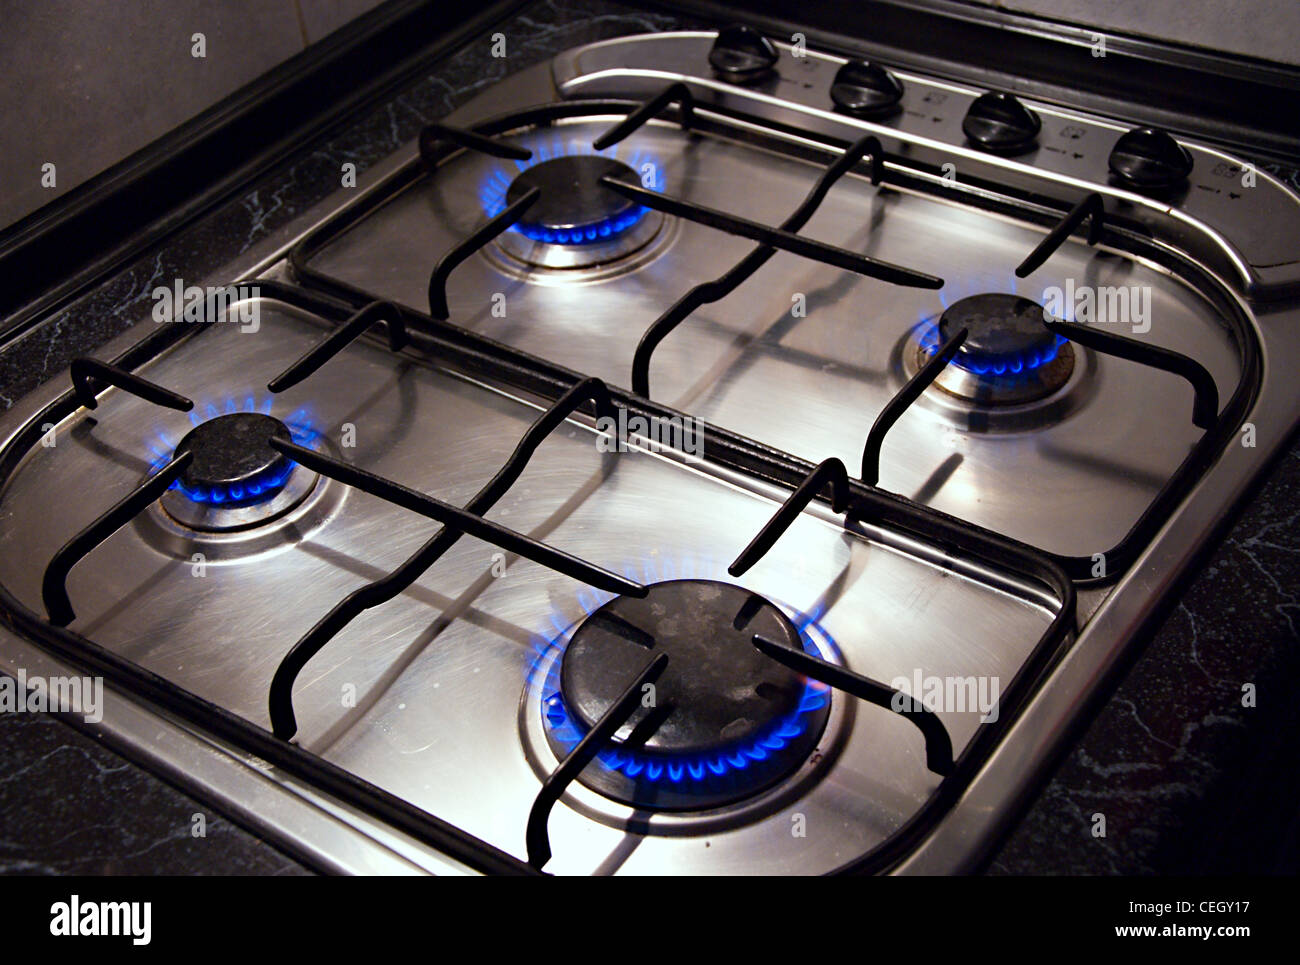 Detail image of kitchen stove. Stock Photo